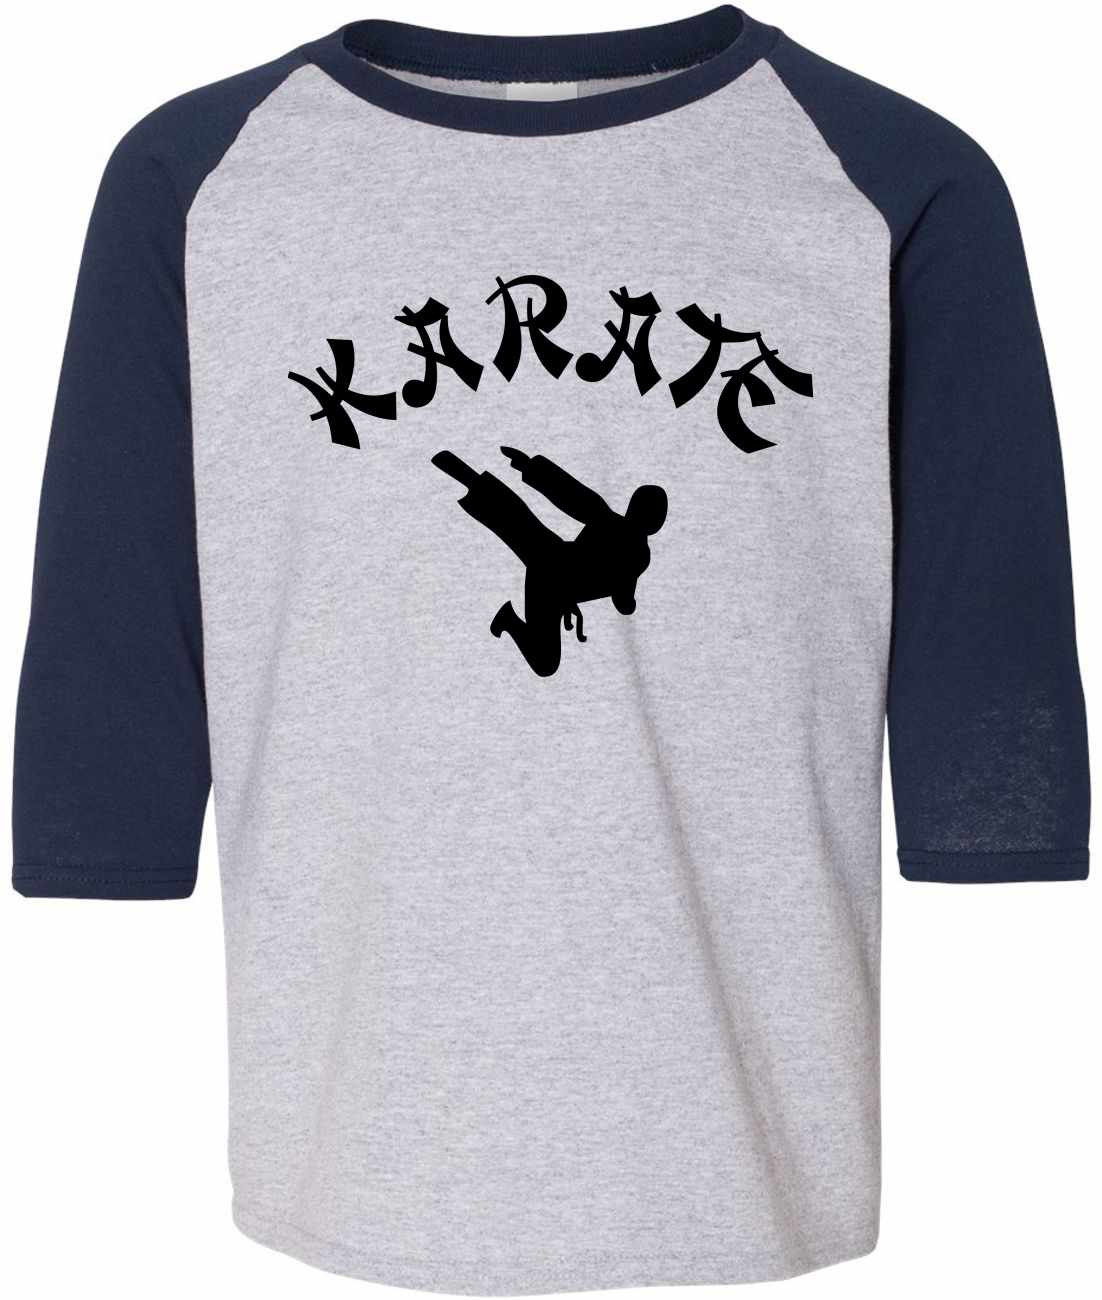 KARATE on Youth Baseball Shirt (#744-212)